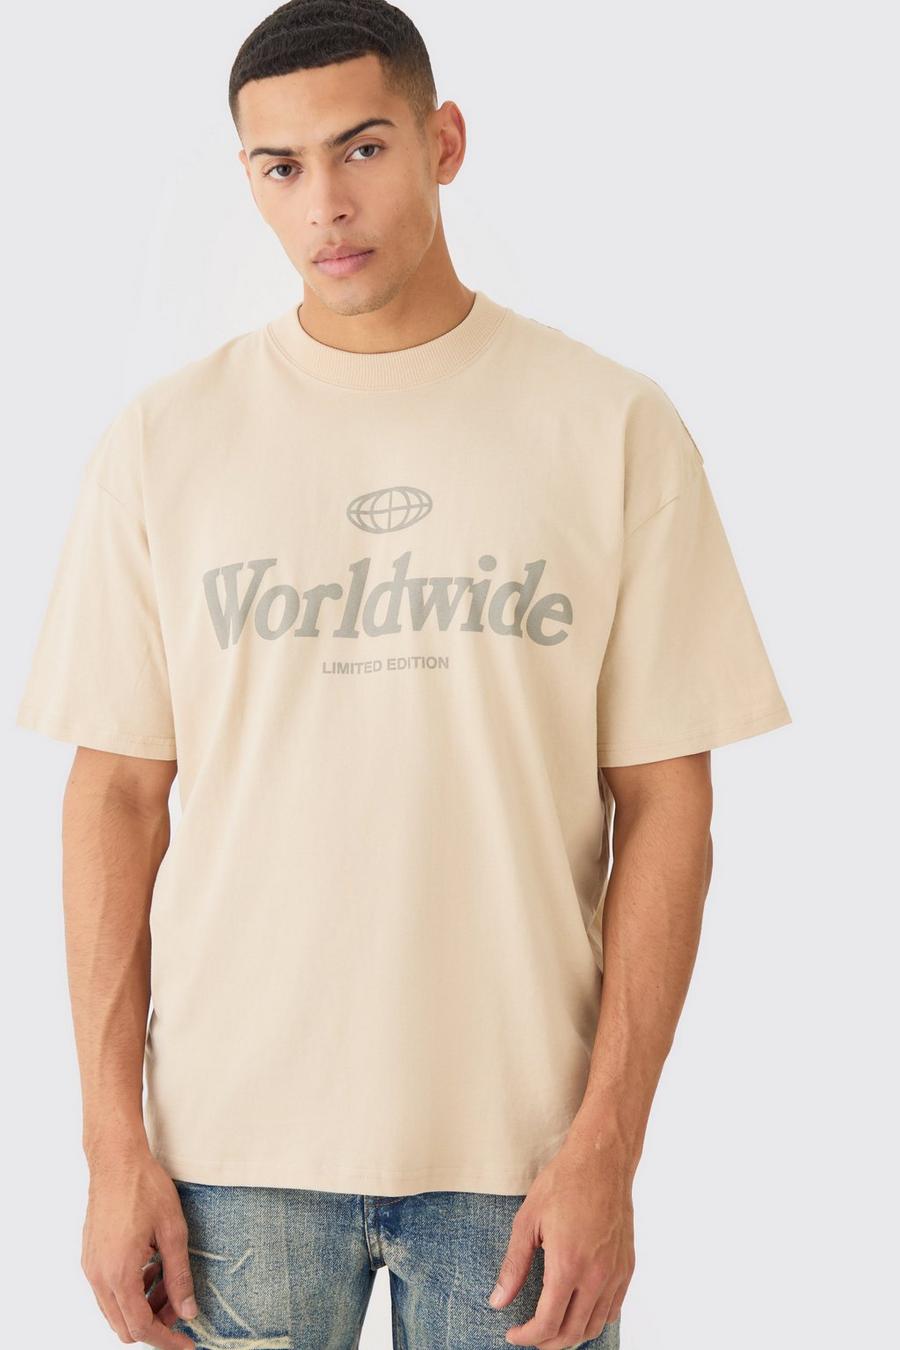 T-shirt oversize Worldwide, Sand image number 1